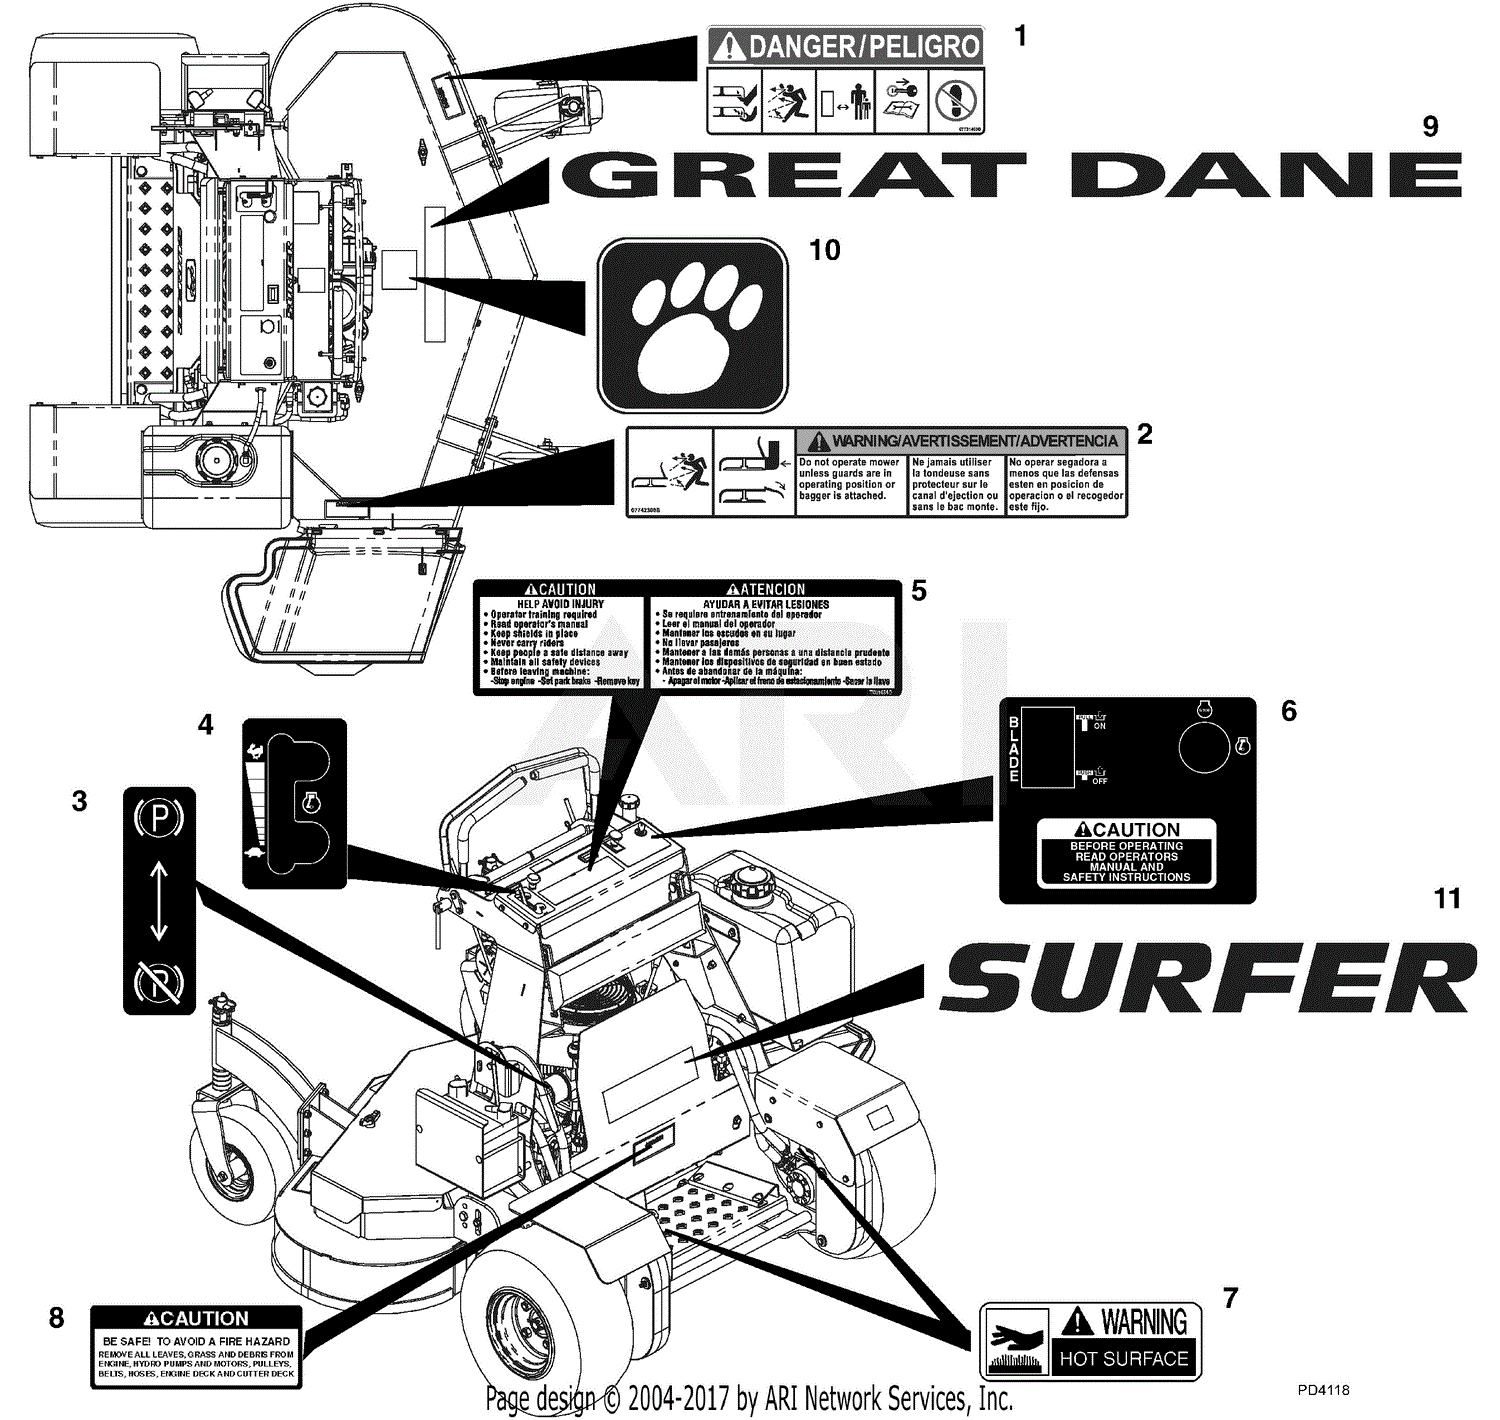 Great Dane Super Surfer Series 2 mowing 